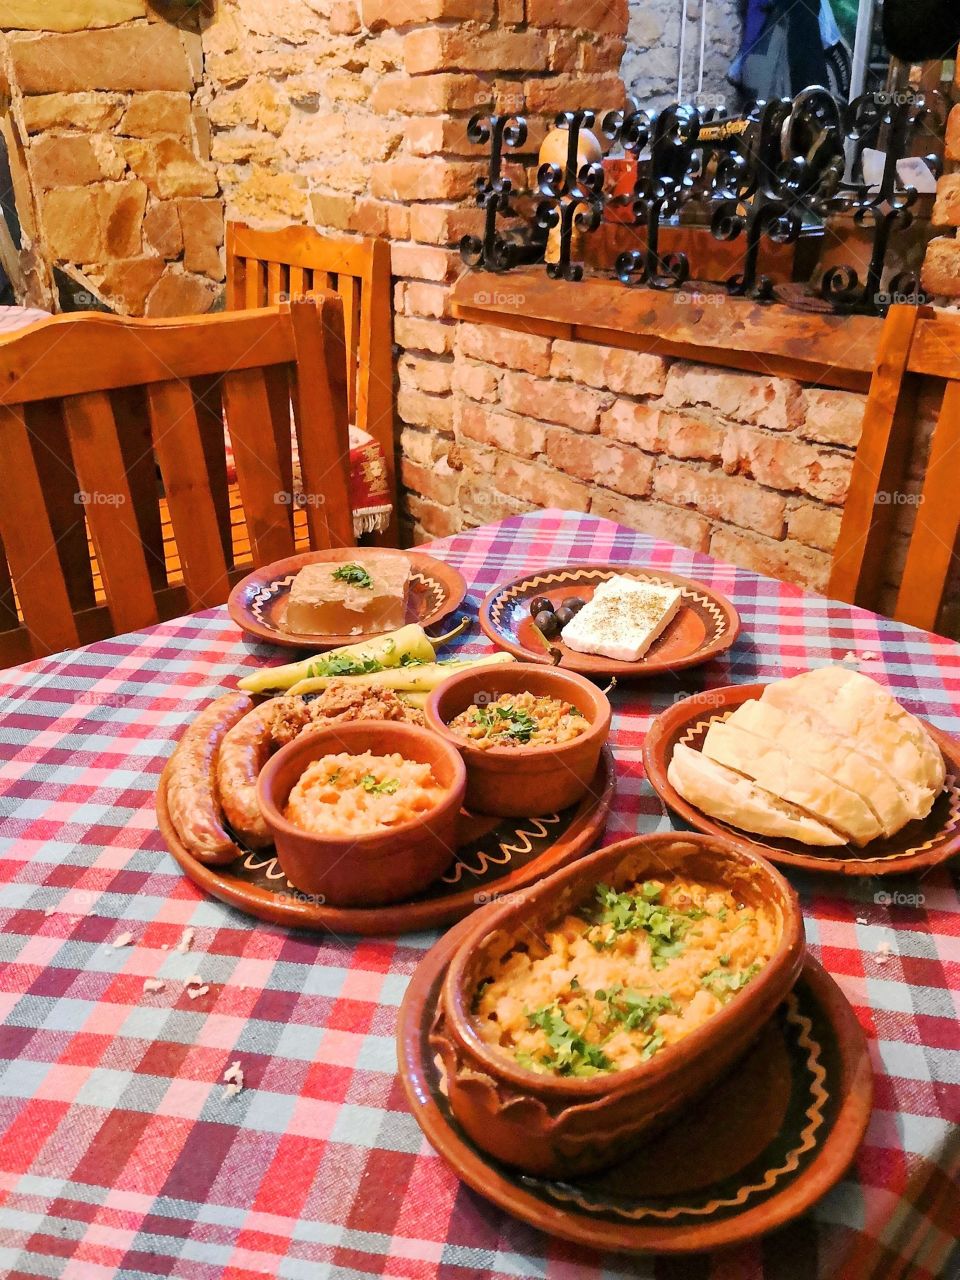 Typical traditional Macedonian food
Location: Skopje, Macedonia